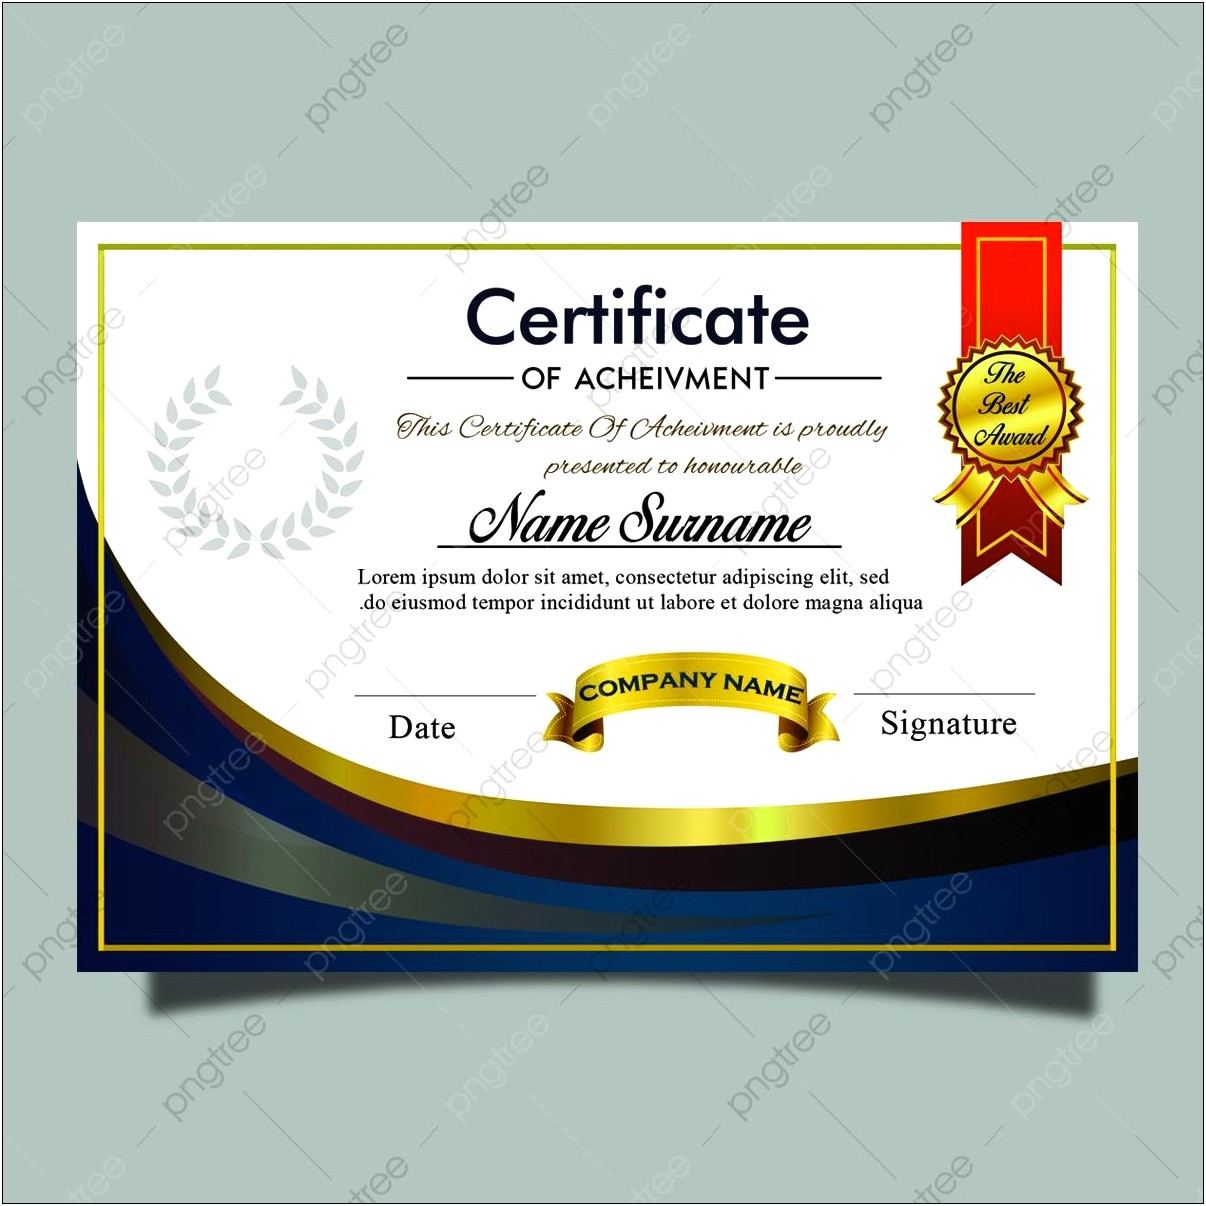 Award Certificate Psd Template Free Download